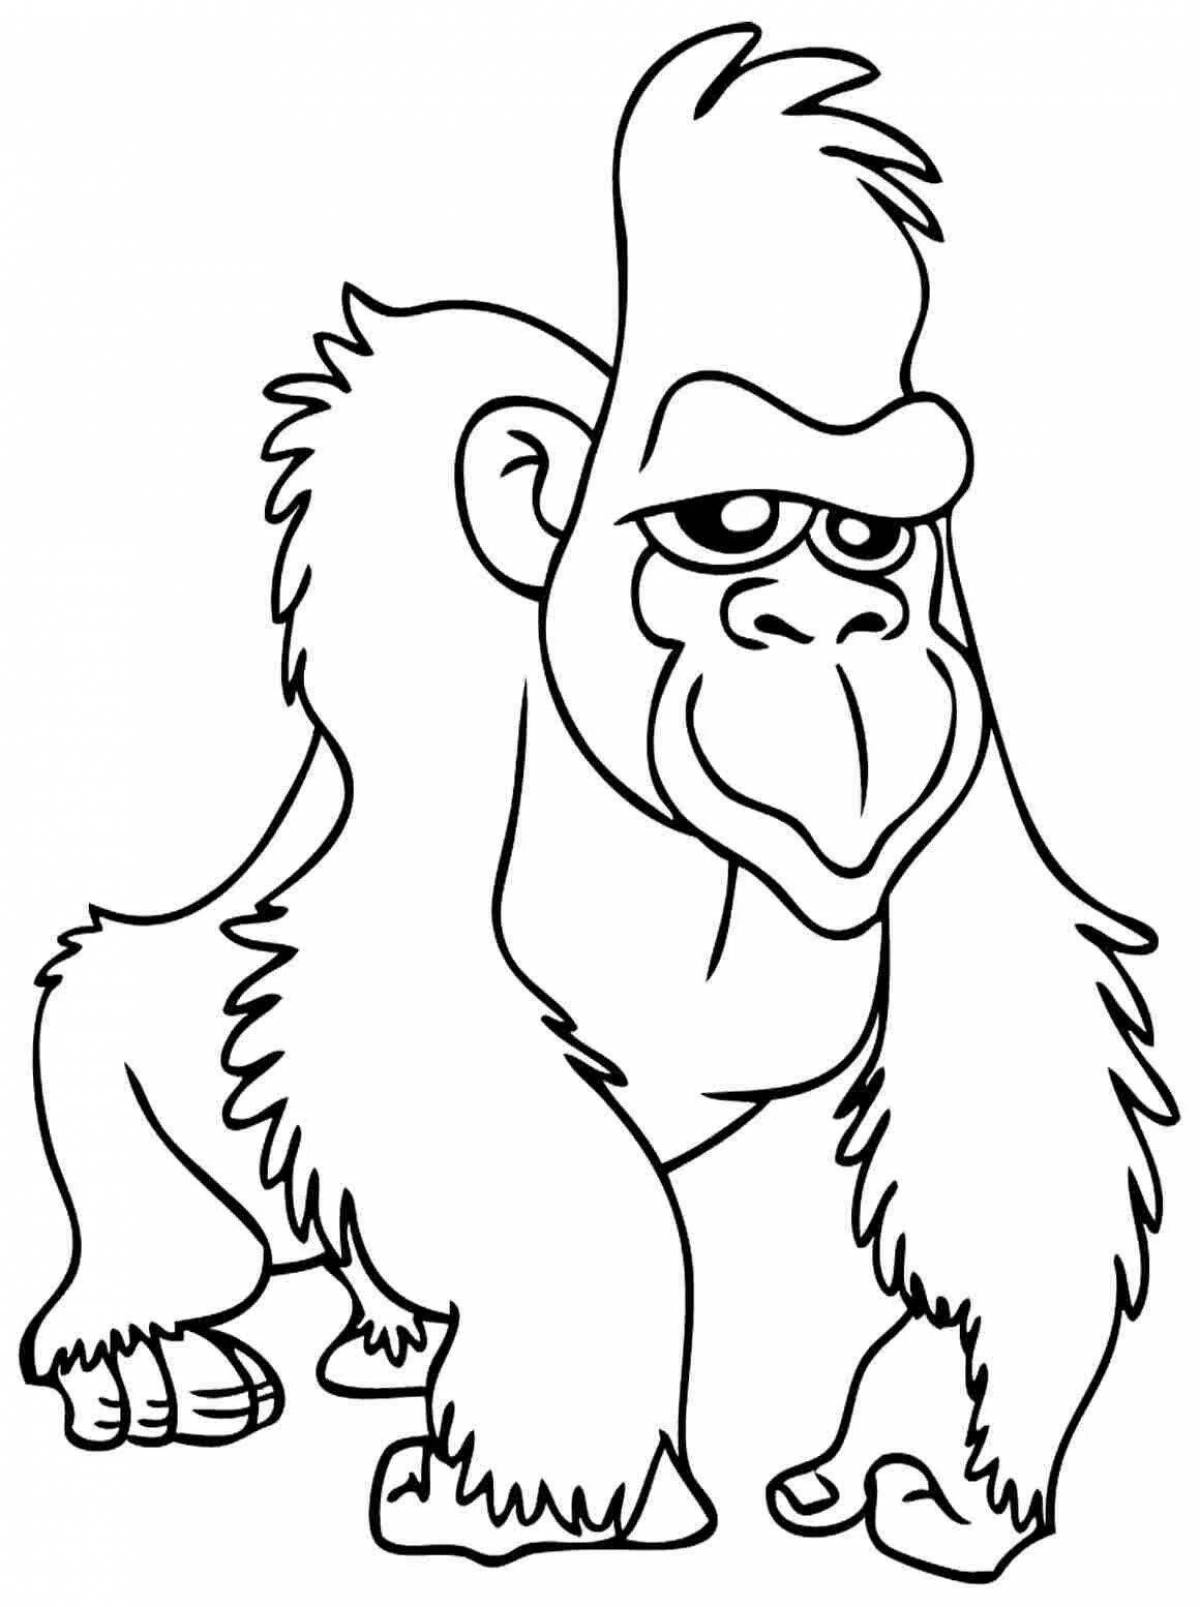 Vibrant orangutan coloring page